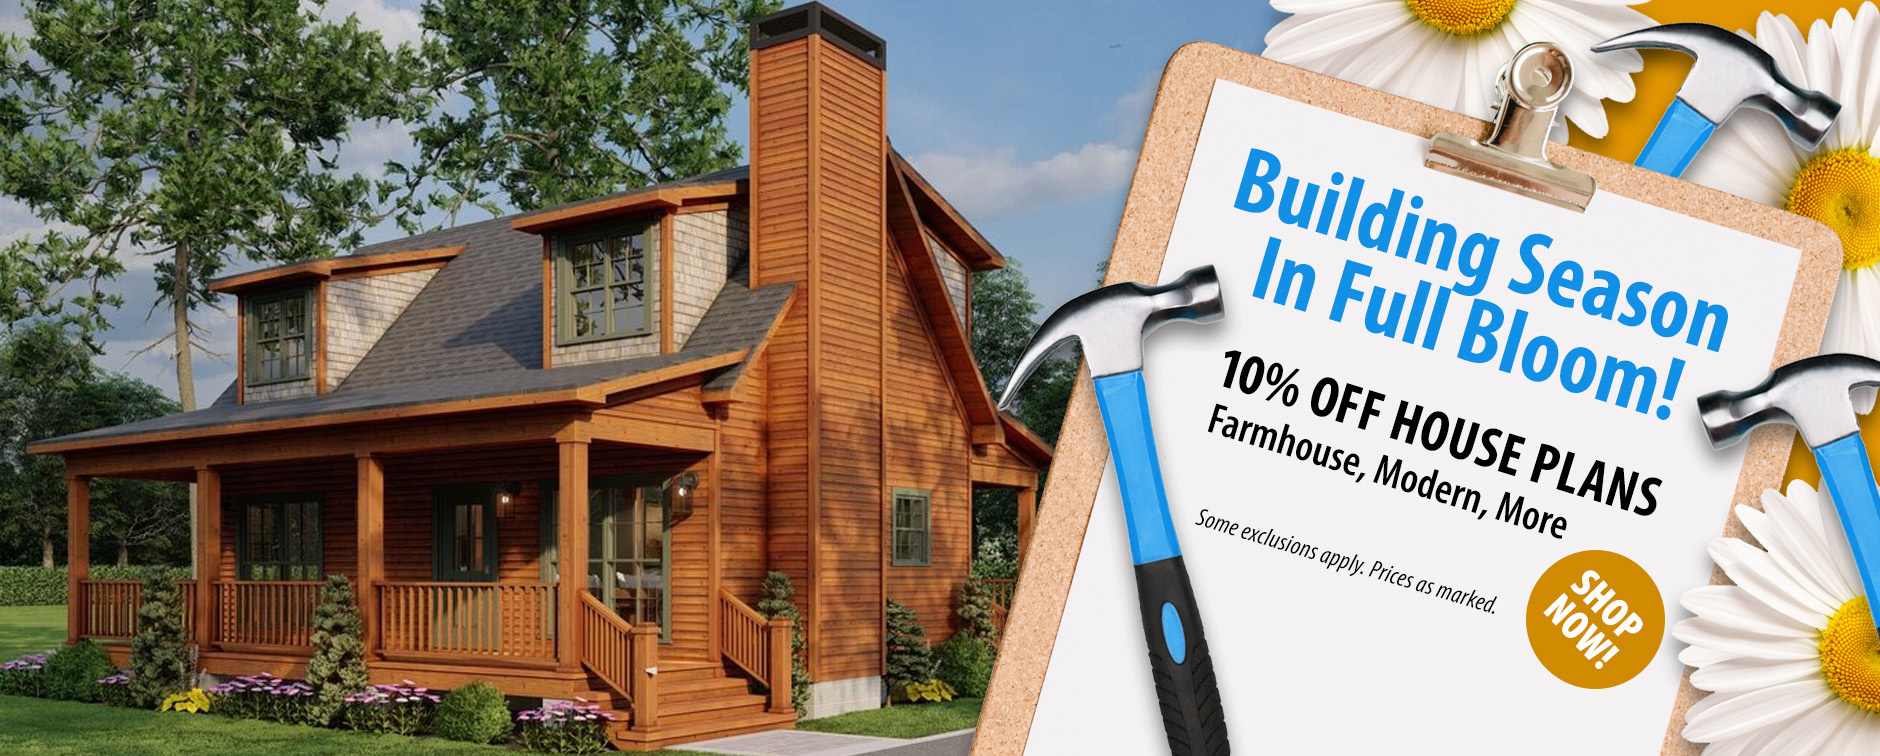 Get 10% Off Dream House Plans - Farmhouse, Modern, More